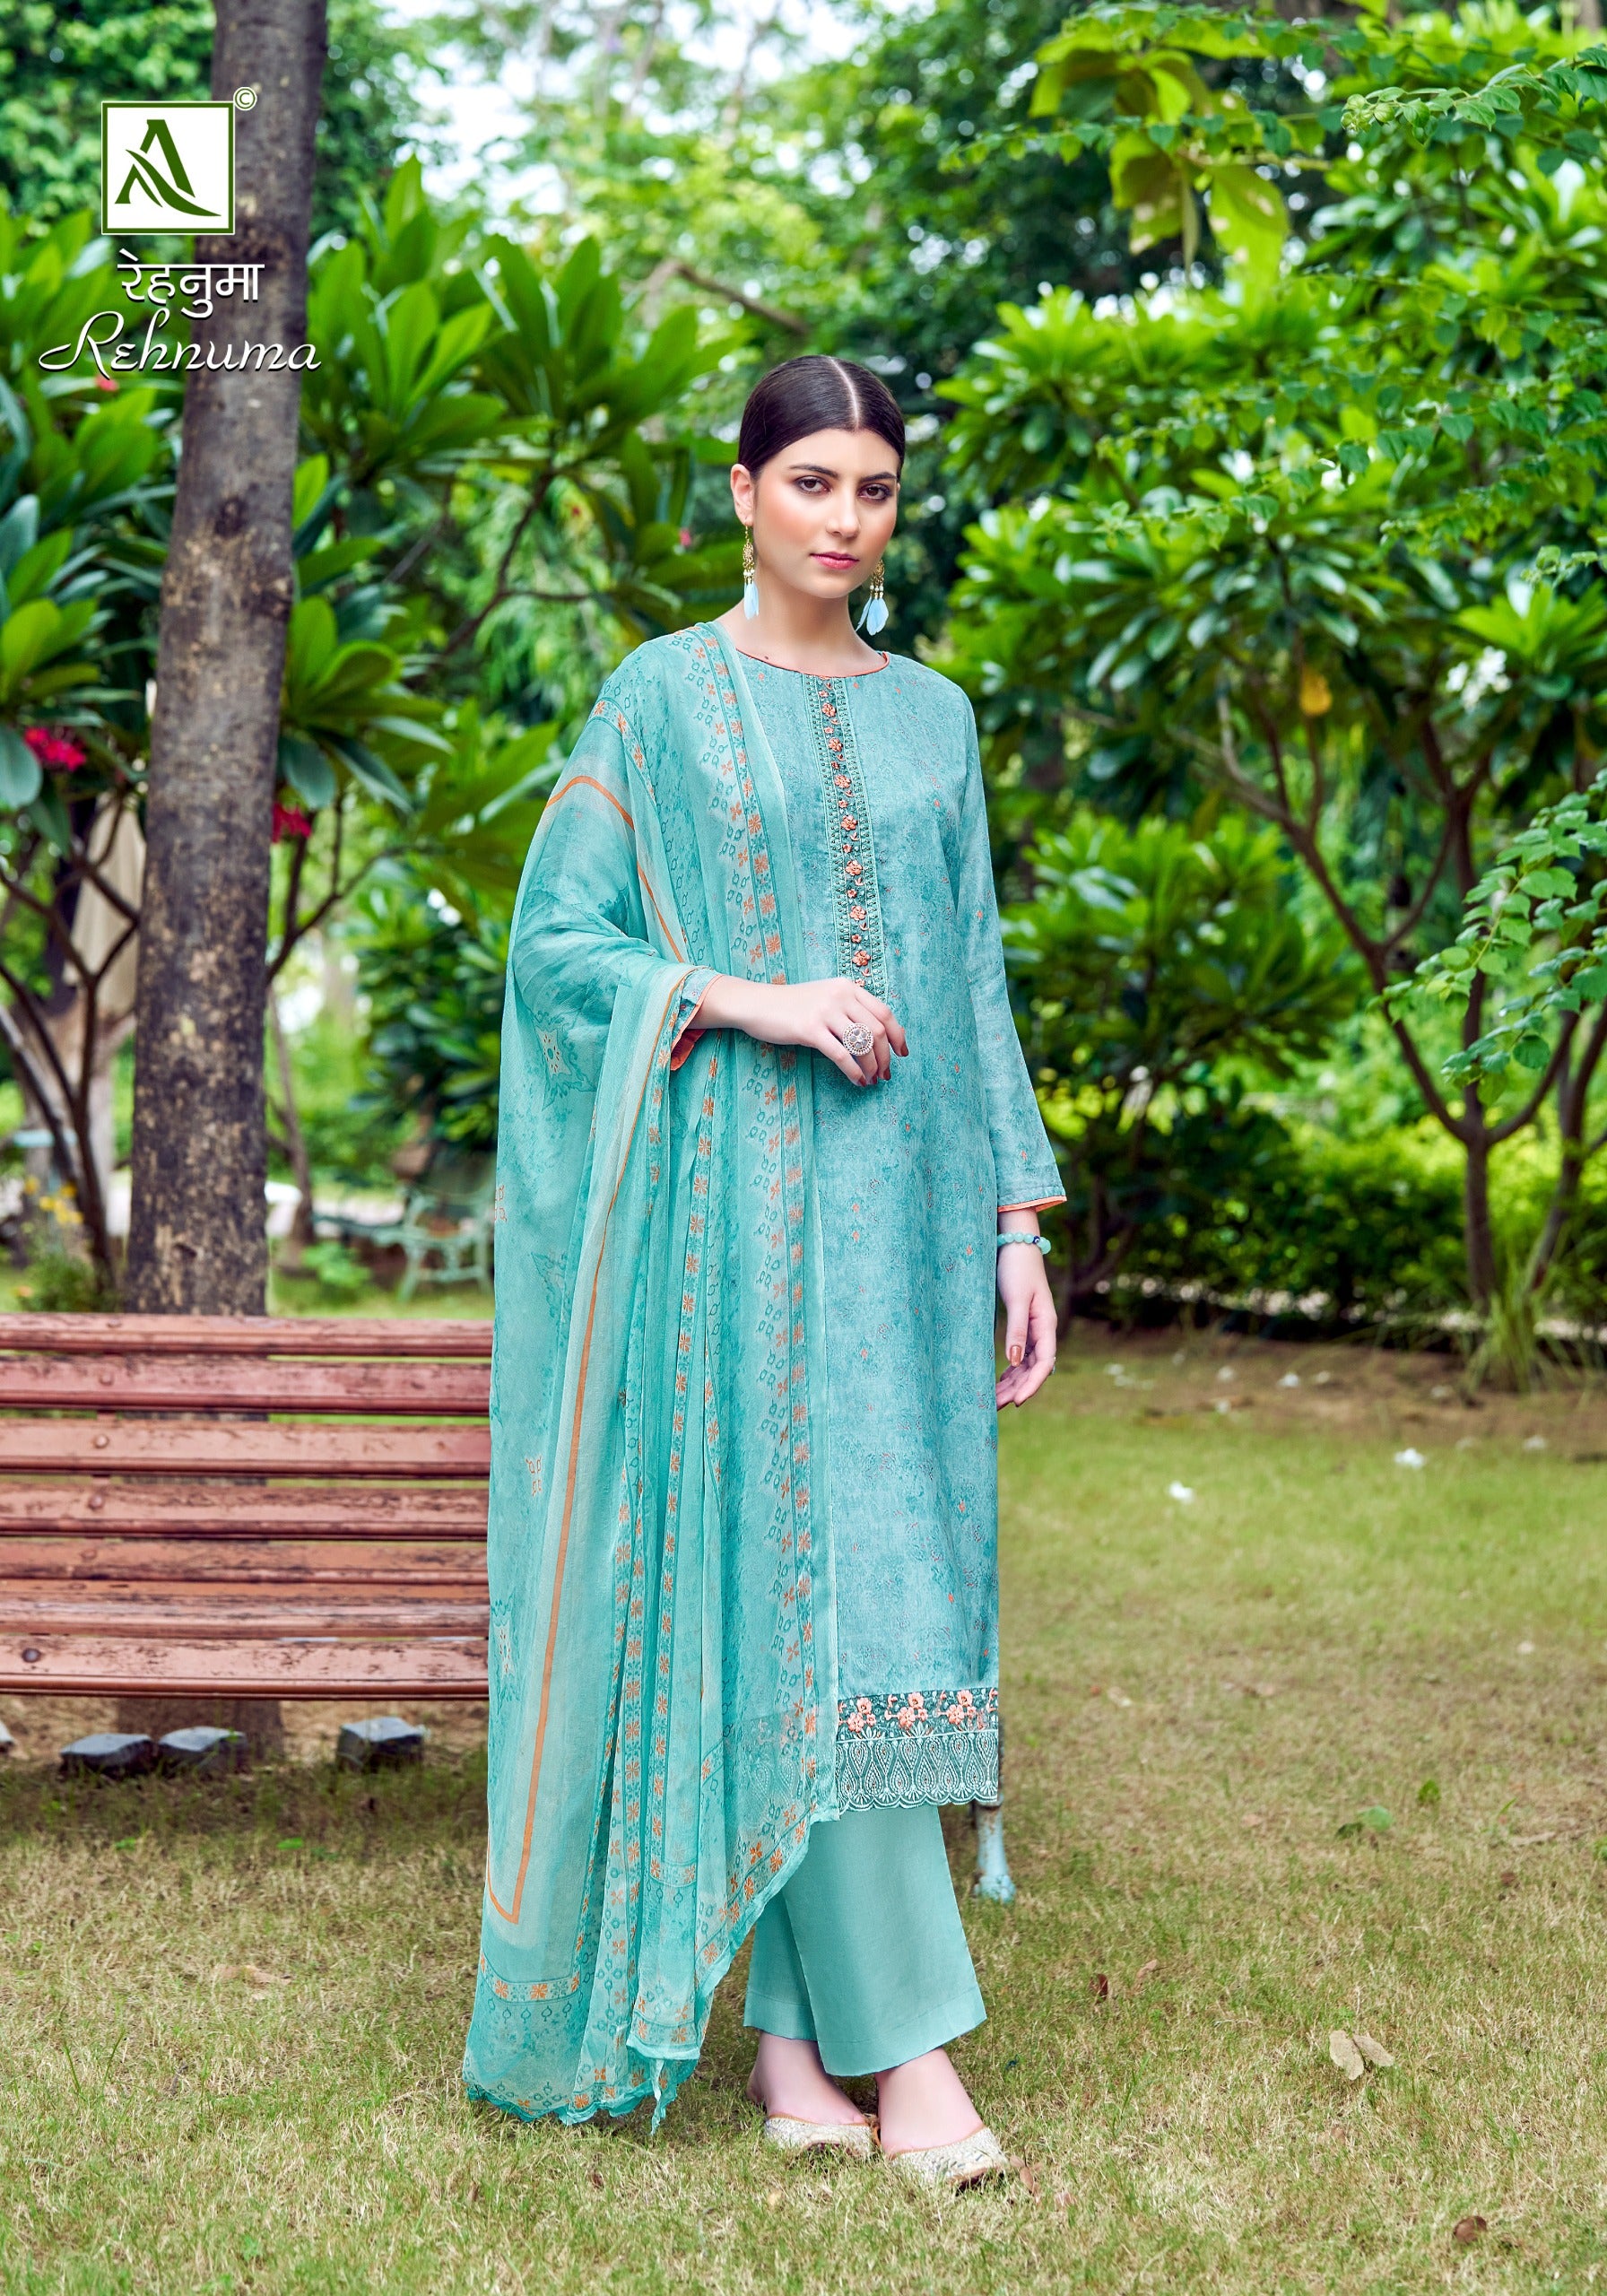 Alok Suit Rehnuma Muslin With Embroidery Work Latest Salwar Suit Collection